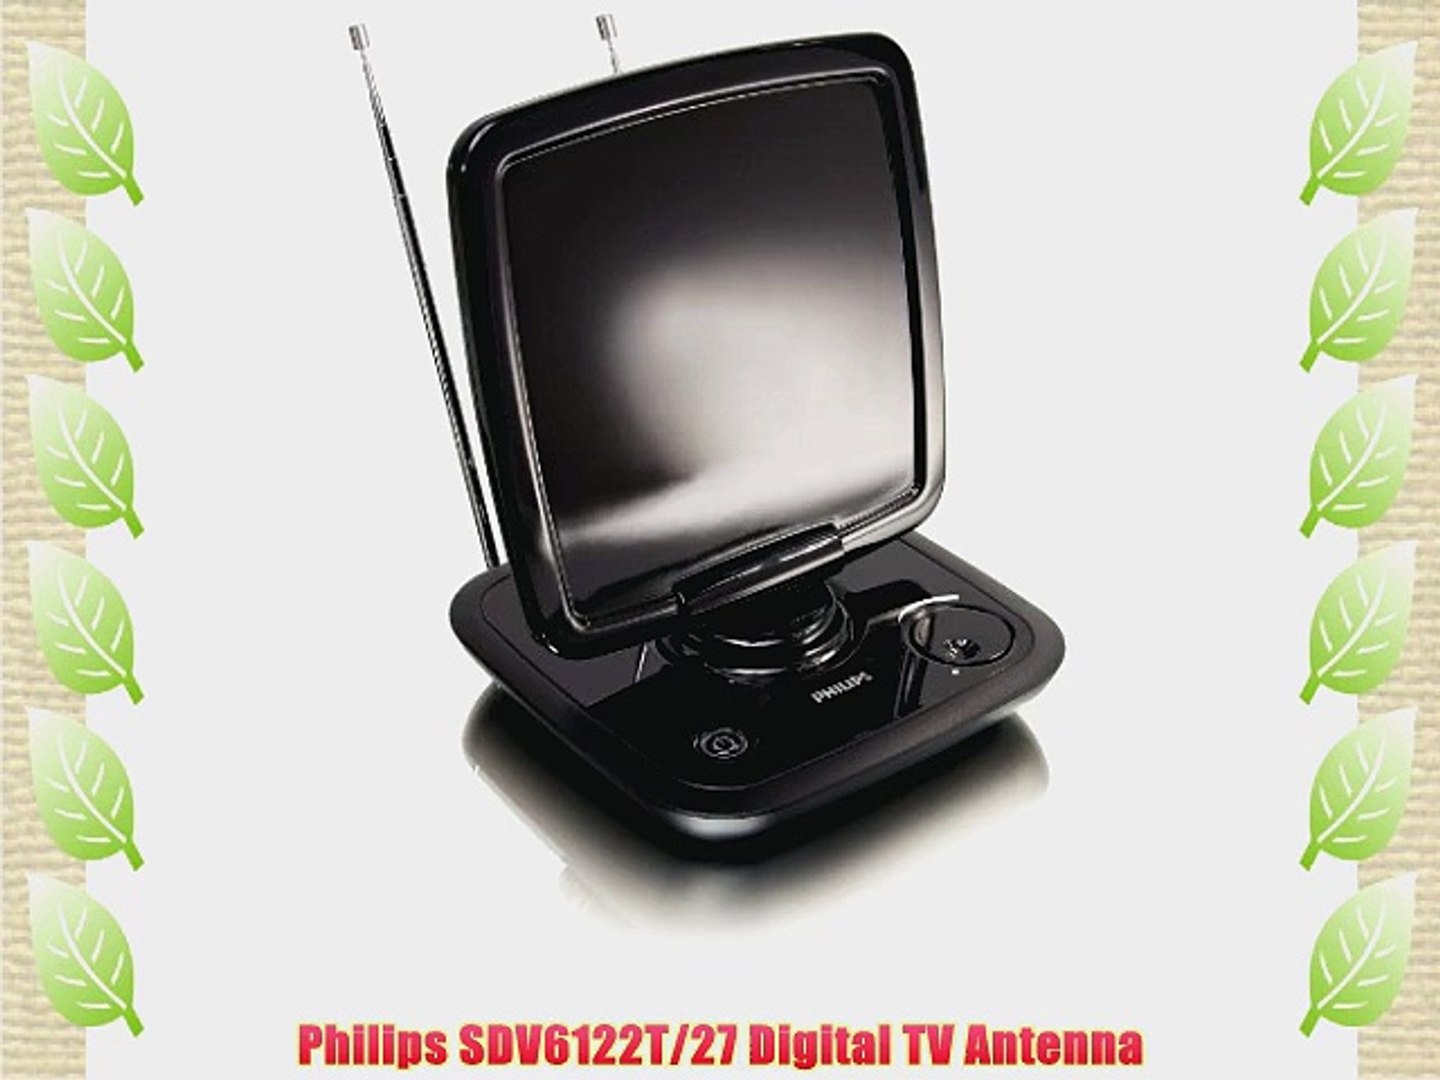 Philips SDV6122T/27 Digital TV Antenna - video Dailymotion